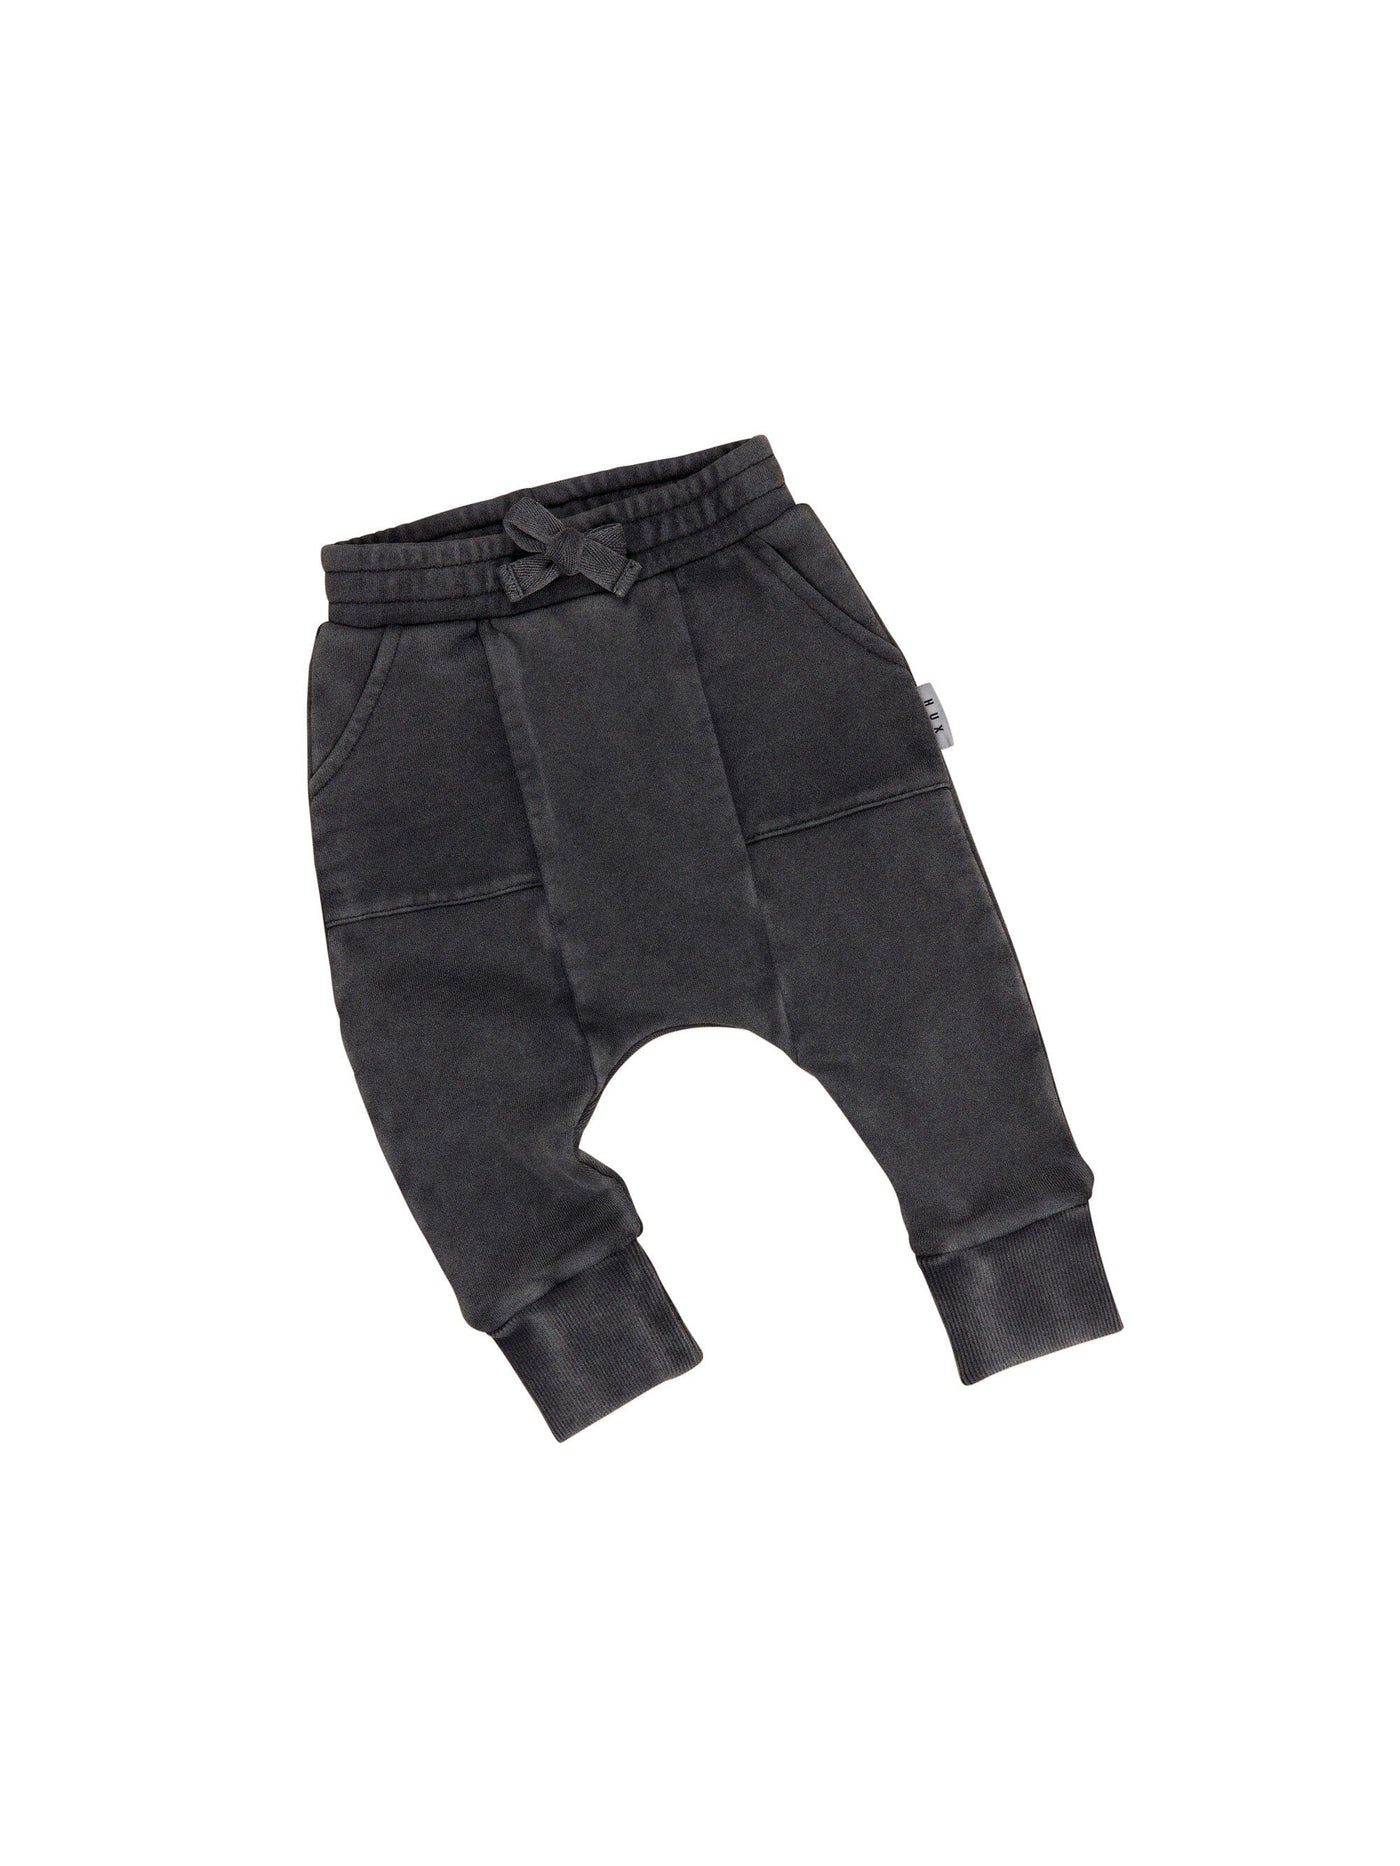 Huxbaby Vintage Black Drop Crotch Pant HB602NS Pants Huxbaby 